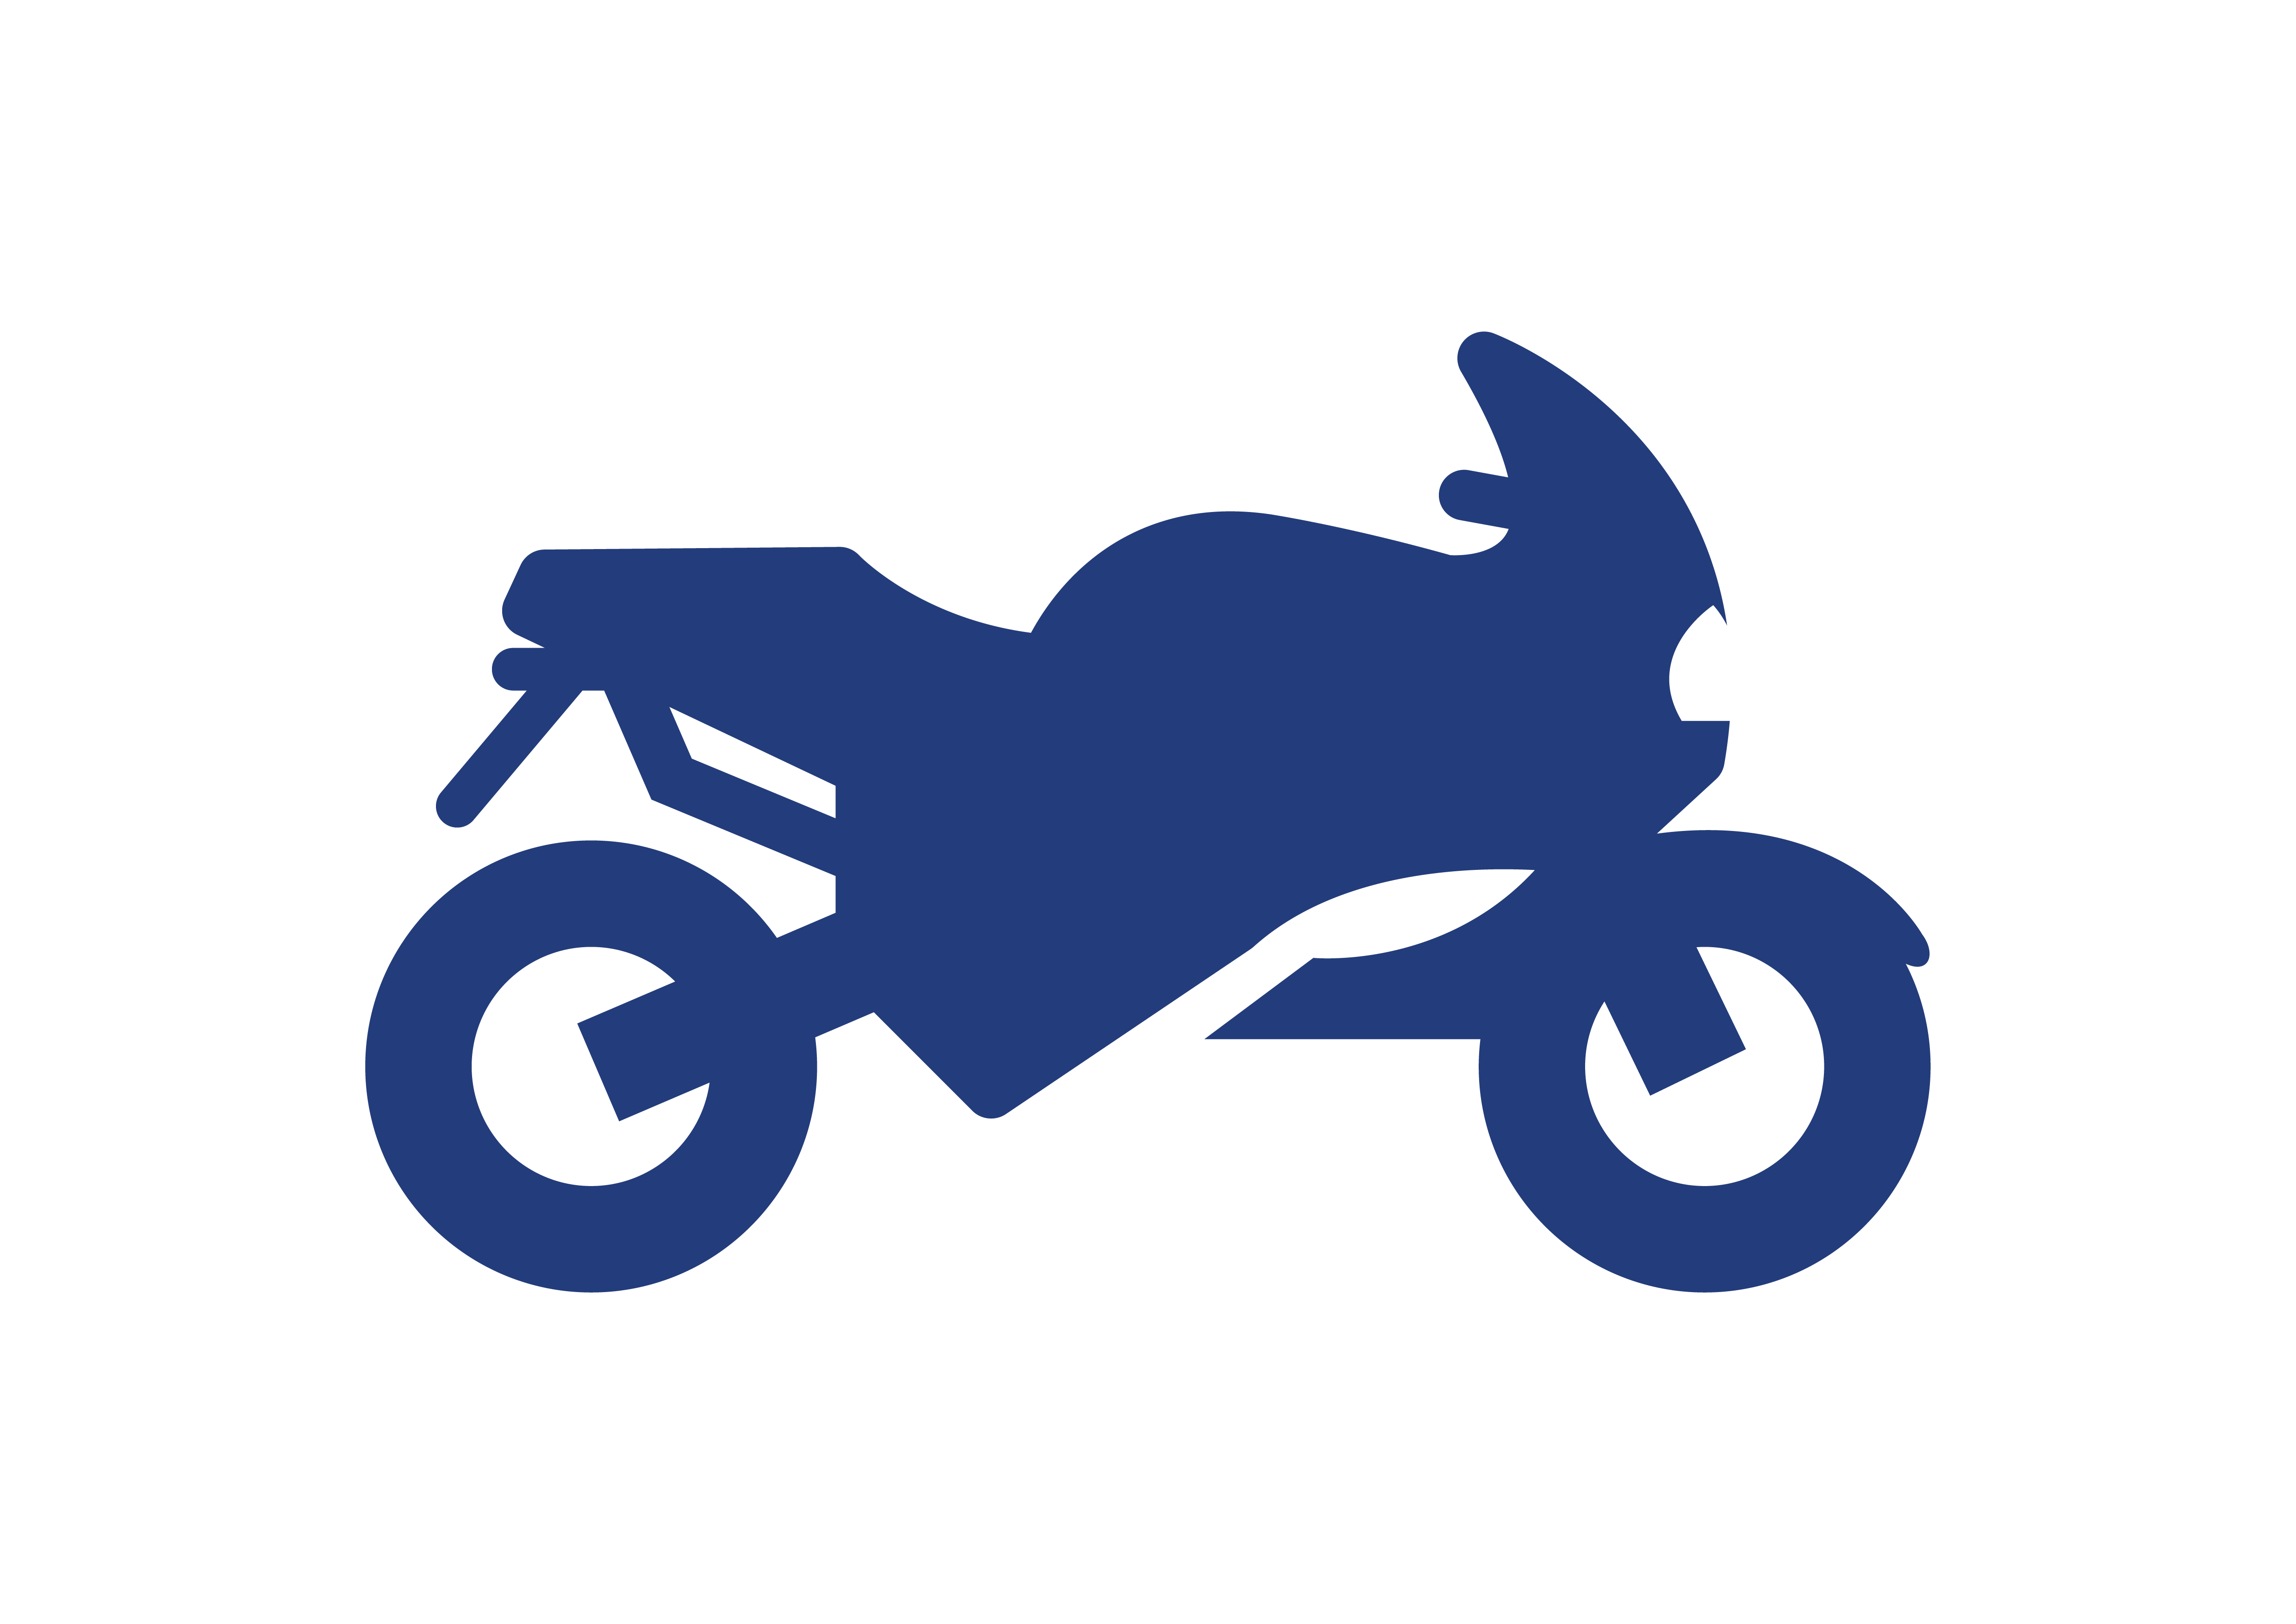 Motorcycle Loans